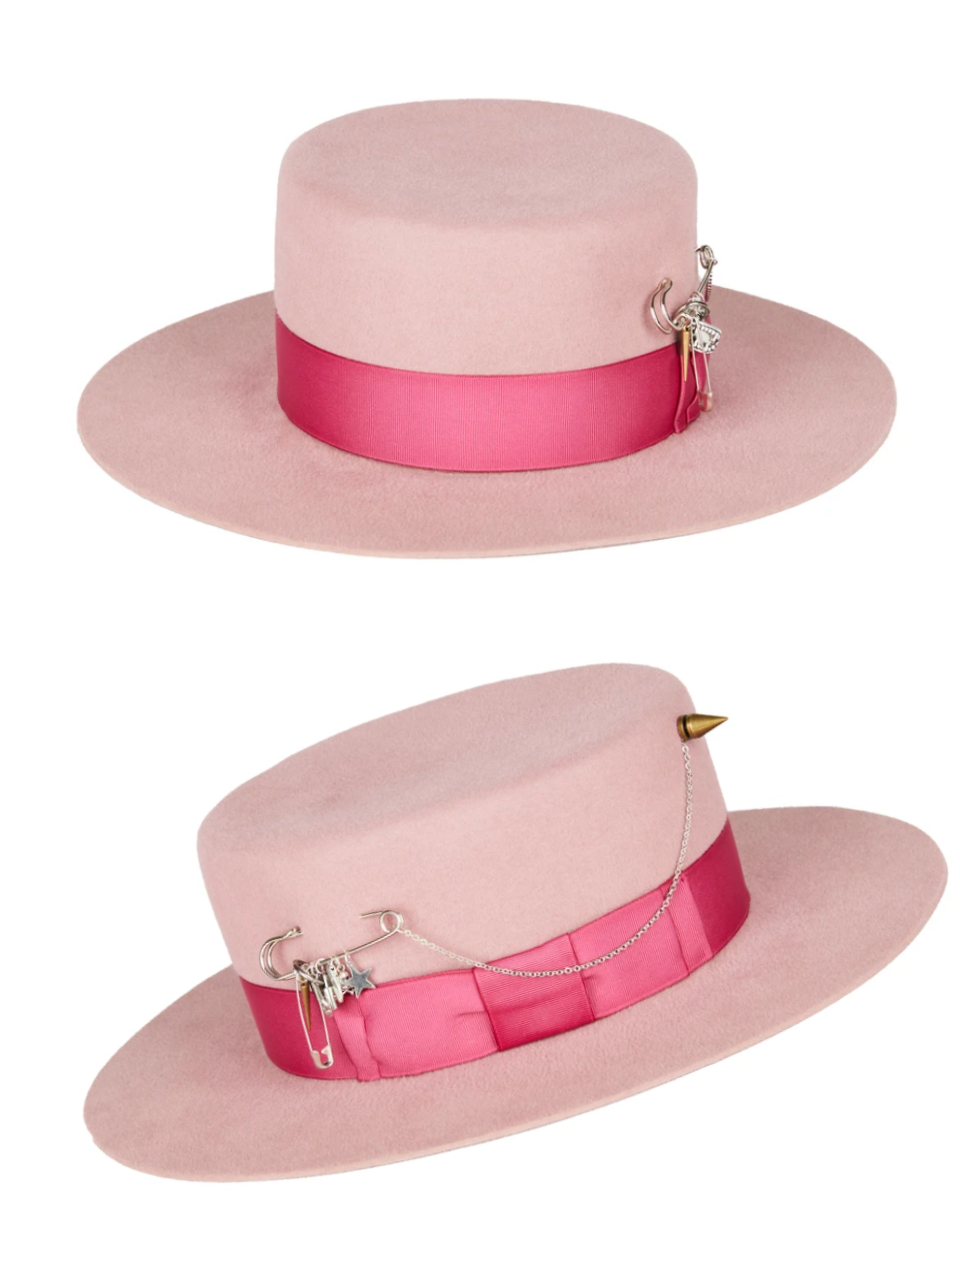 cordobés wool felt hat on sale in pink by gladys tamez millinery